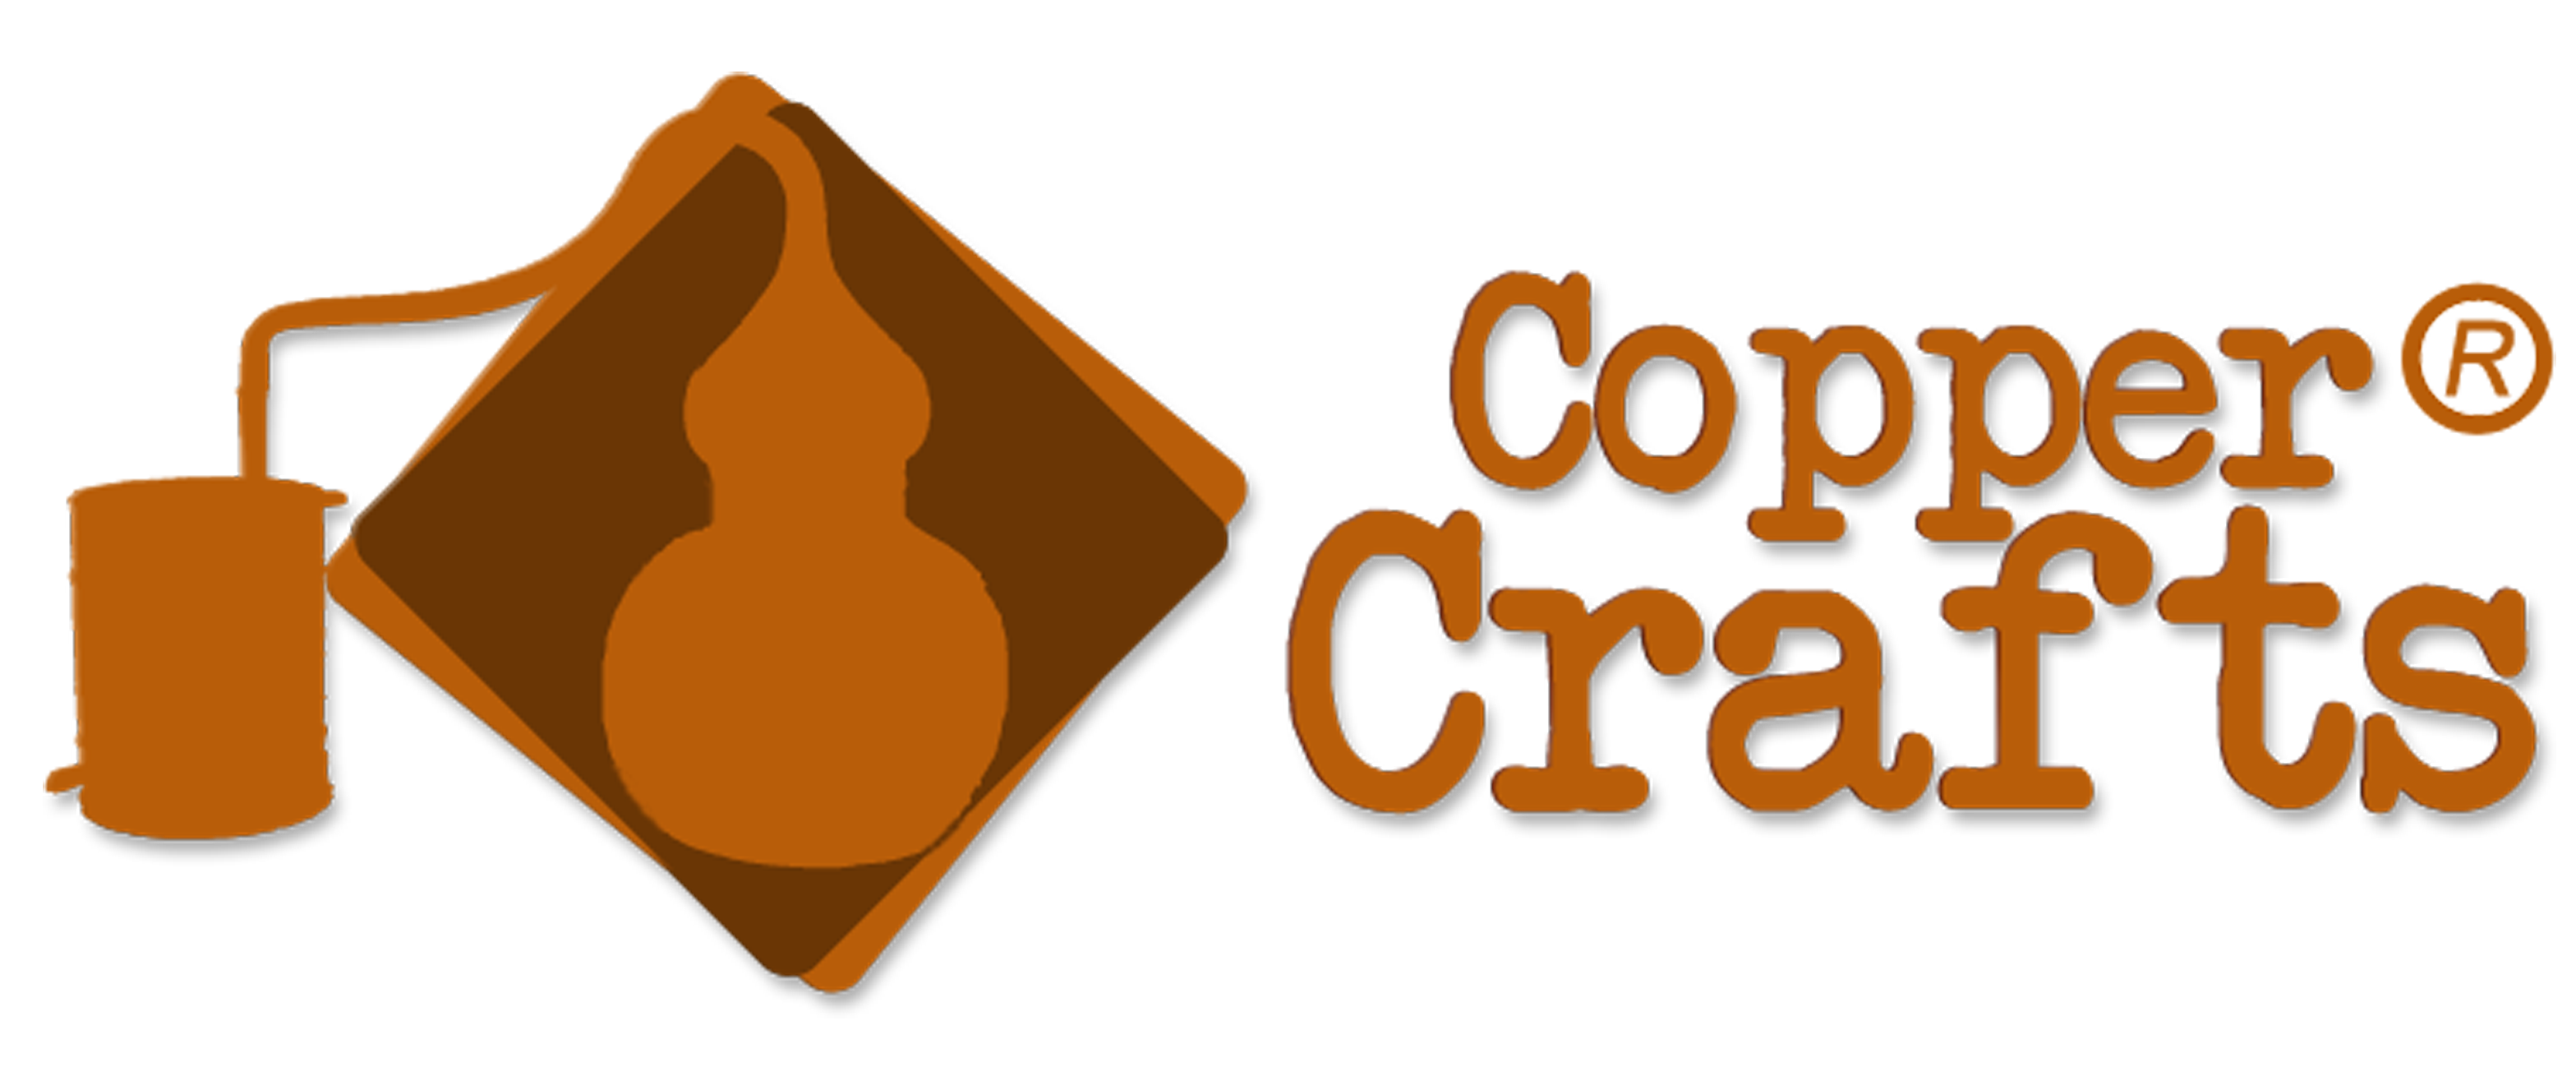 CopperCrafts